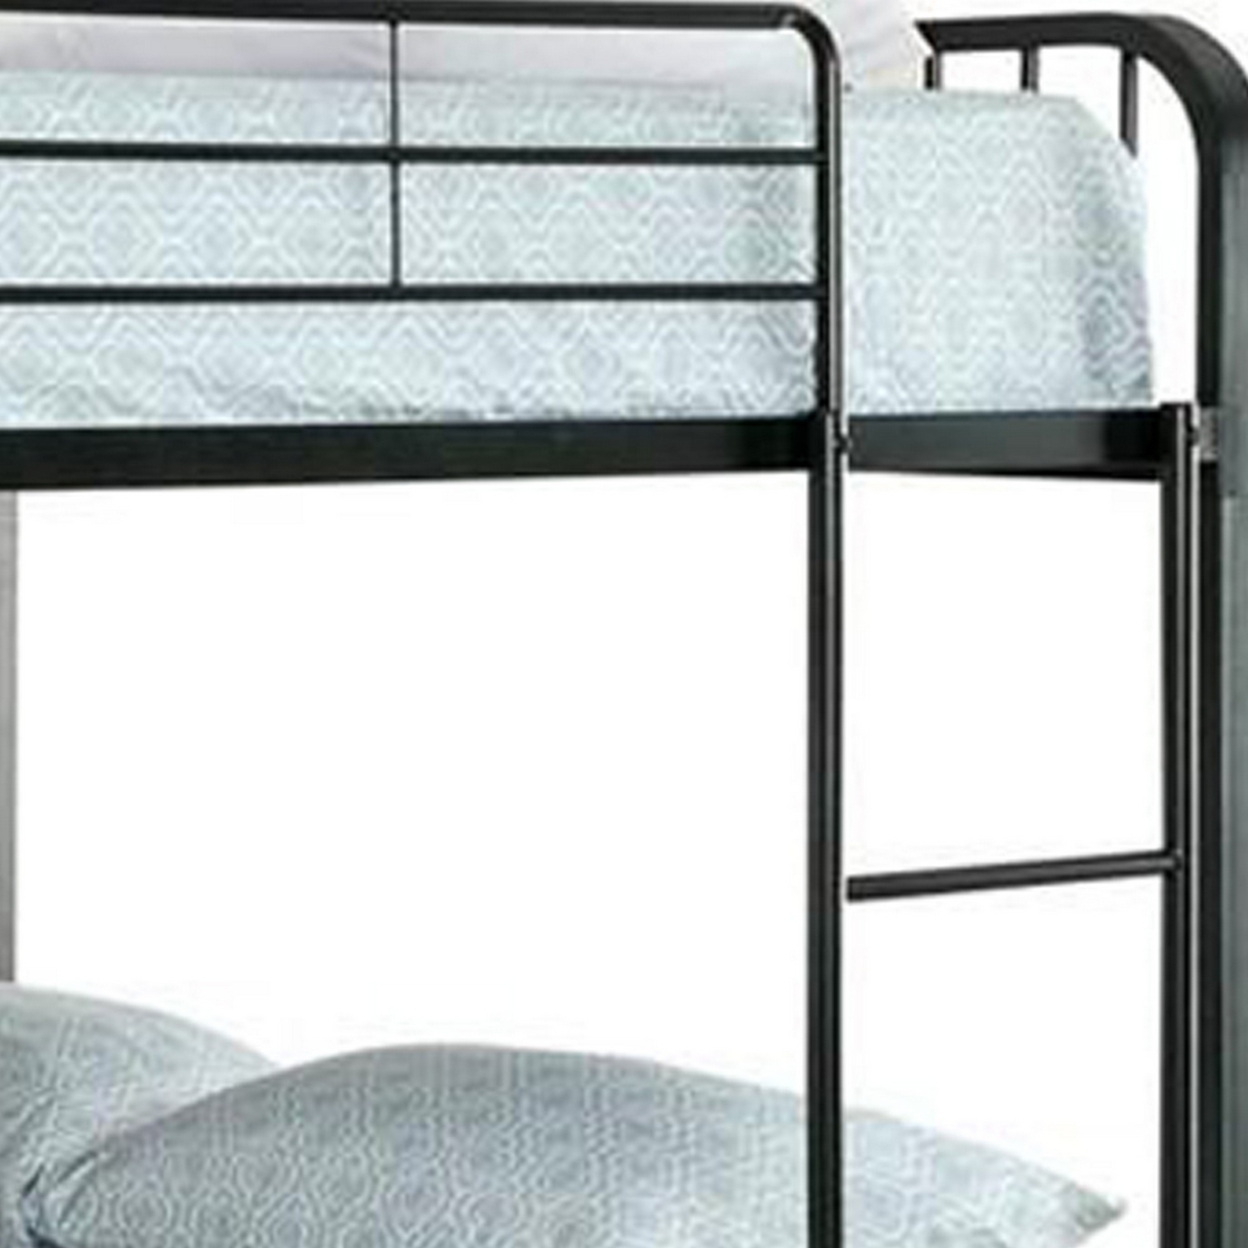 Slatted Design Metal Full Over Full Bunk Bed With Attached Ladder, Black- Saltoro Sherpi